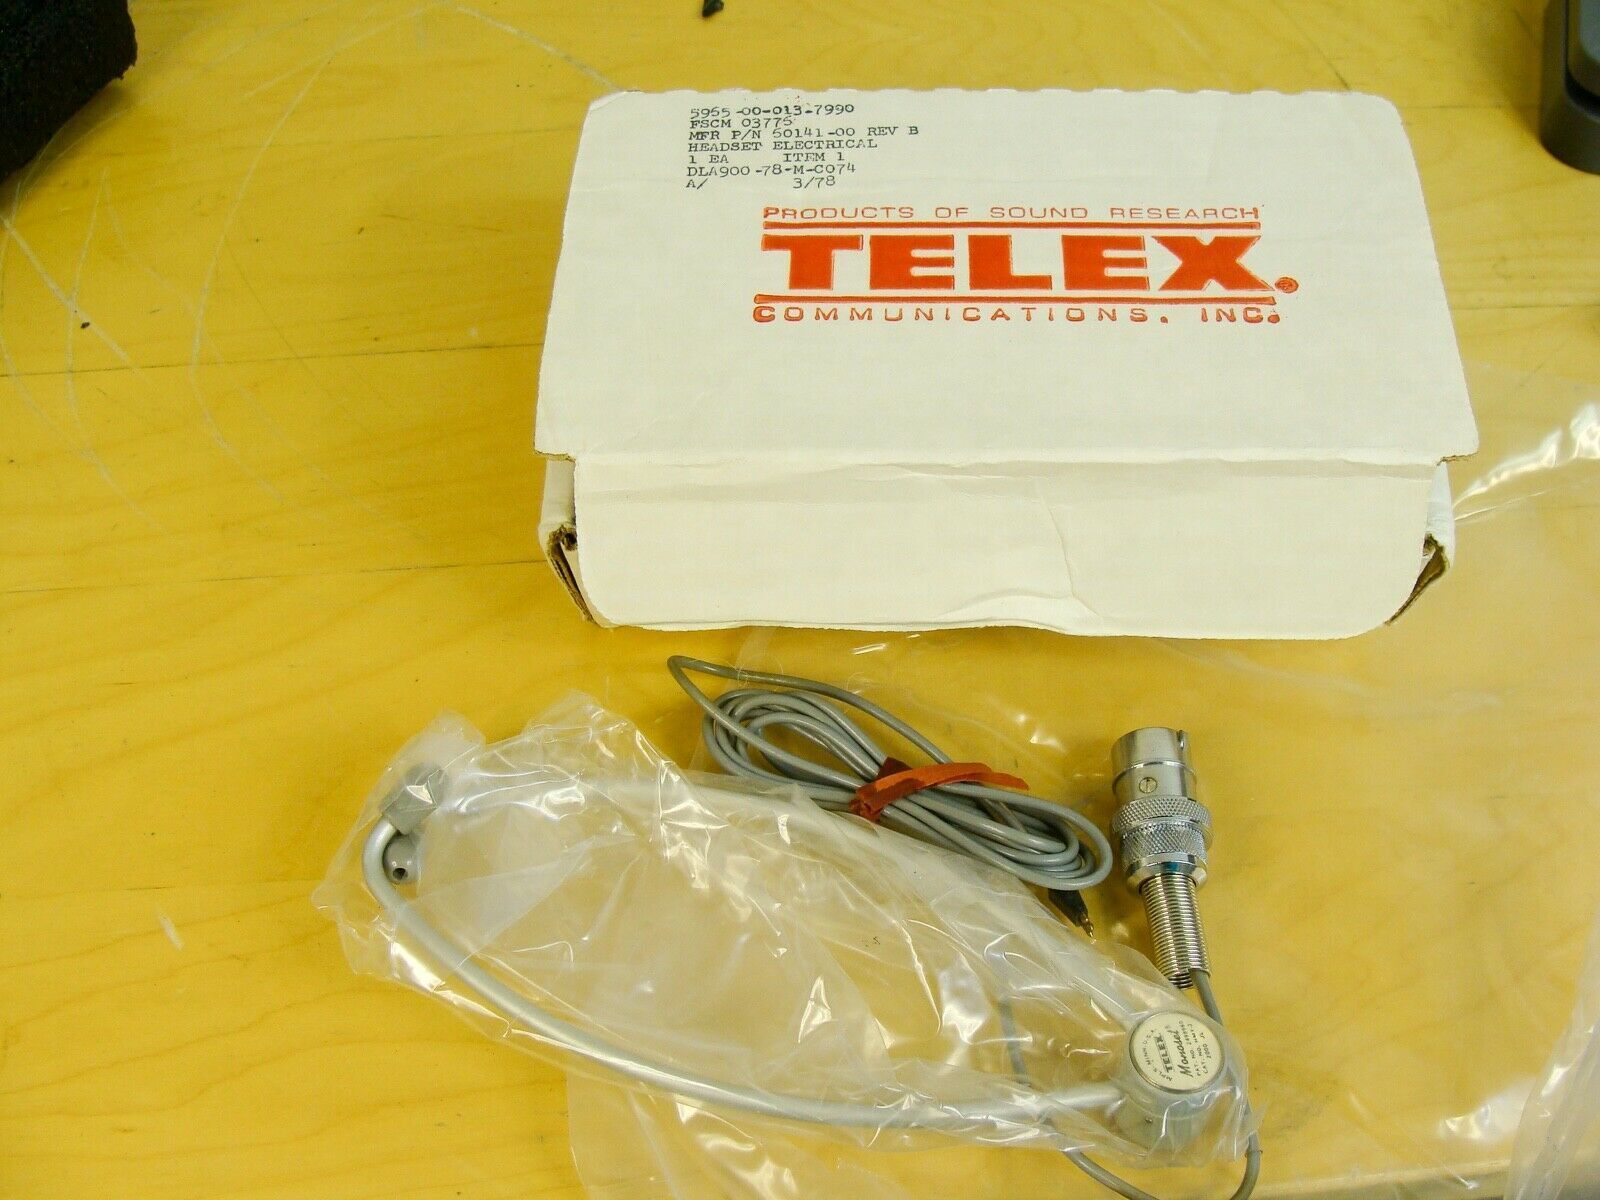 Telex Headset Electrical For Military NSN 5965-00-013-7990 P/N 50141-00 Rev B